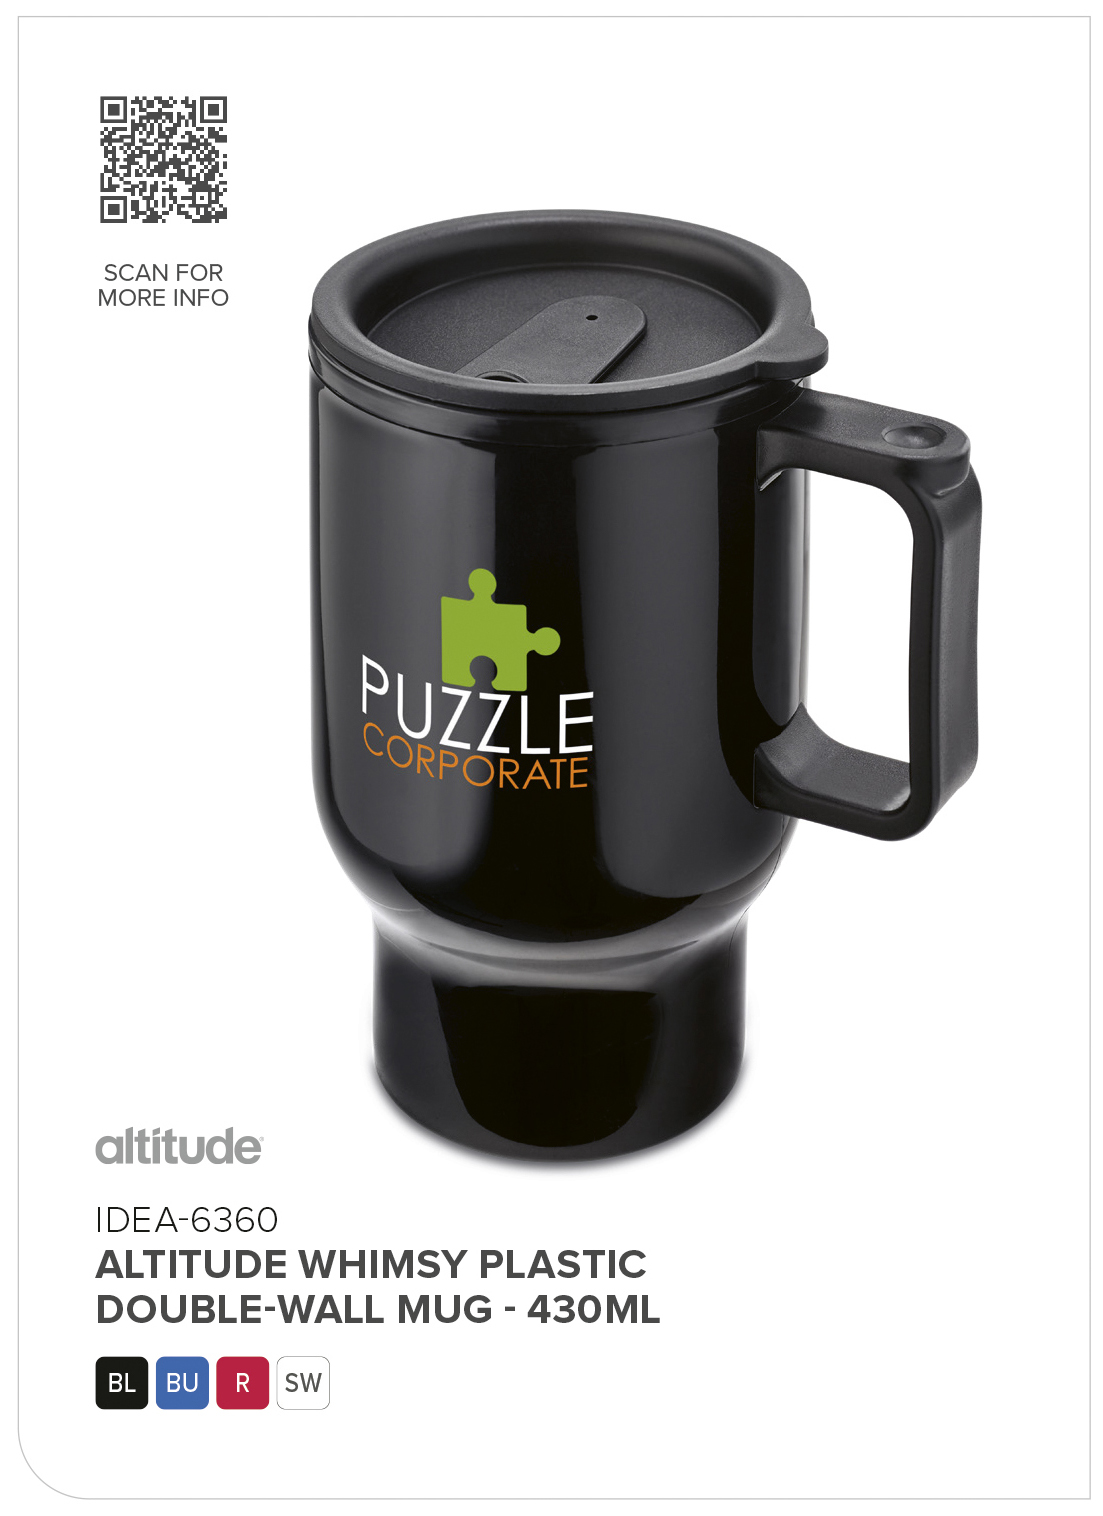 Altitude Whimsy Plastic Double-Wall Mug - 430ml